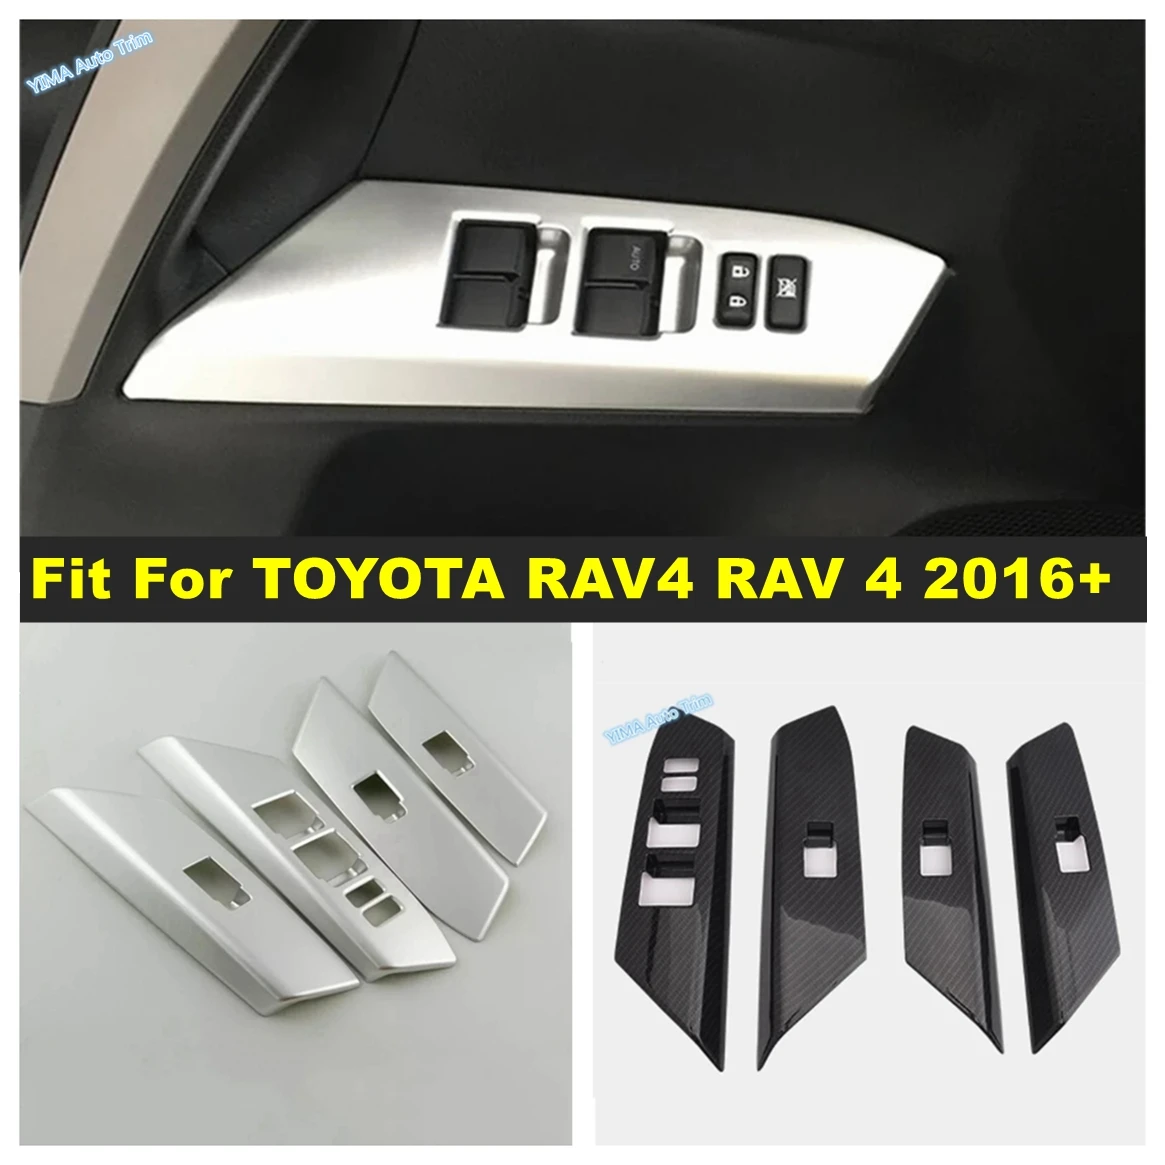 

Fit For TOYOTA RAV4 RAV 4 2016 2017 2018 ABS Car Styling Inner Door Armrest Window Lift Button Cover Trim Interior Accessories